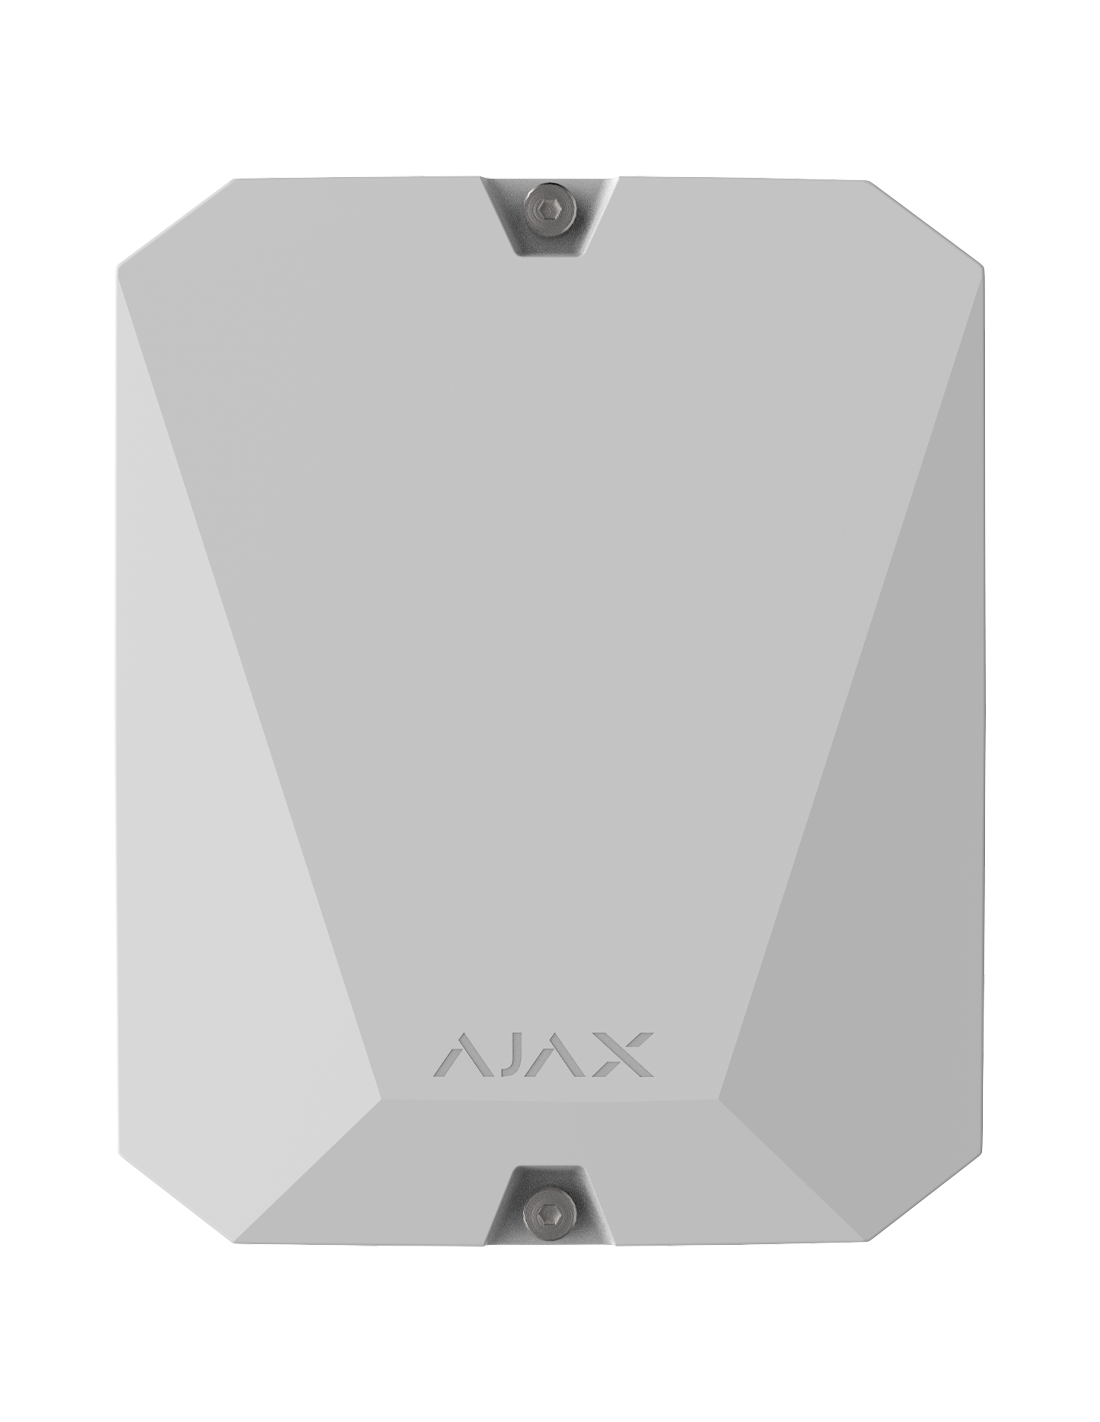 Alarma Ajax Systems